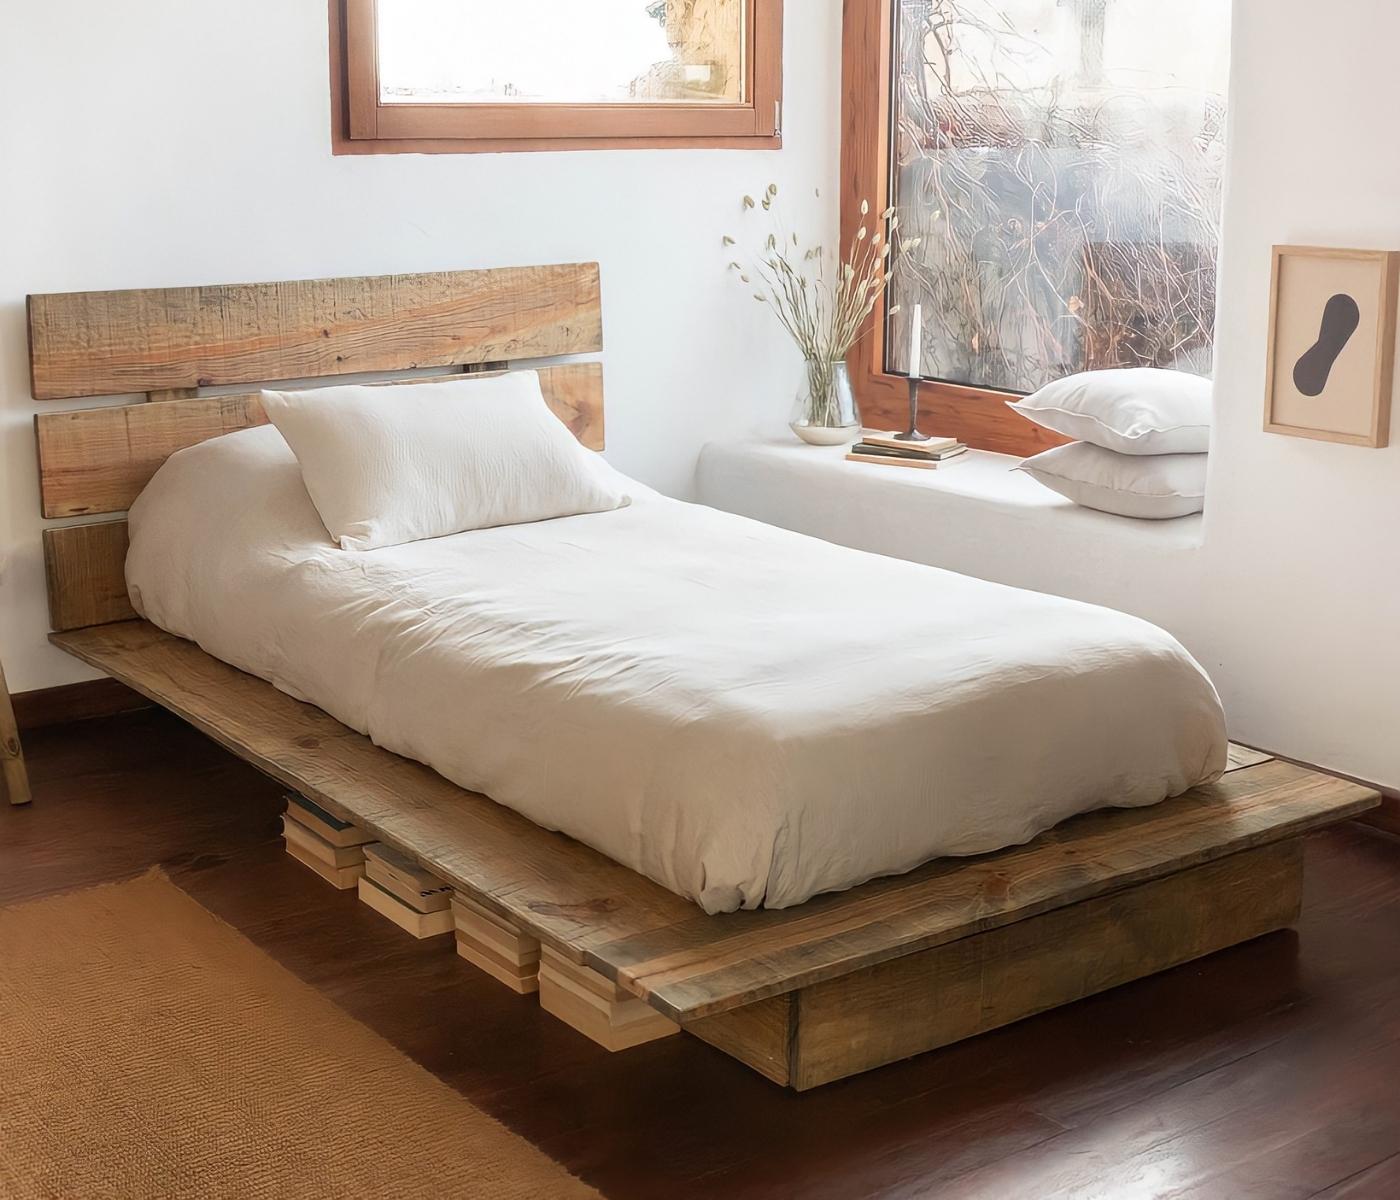  Tatami-Einzelbettgestell aus recyceltem Holz